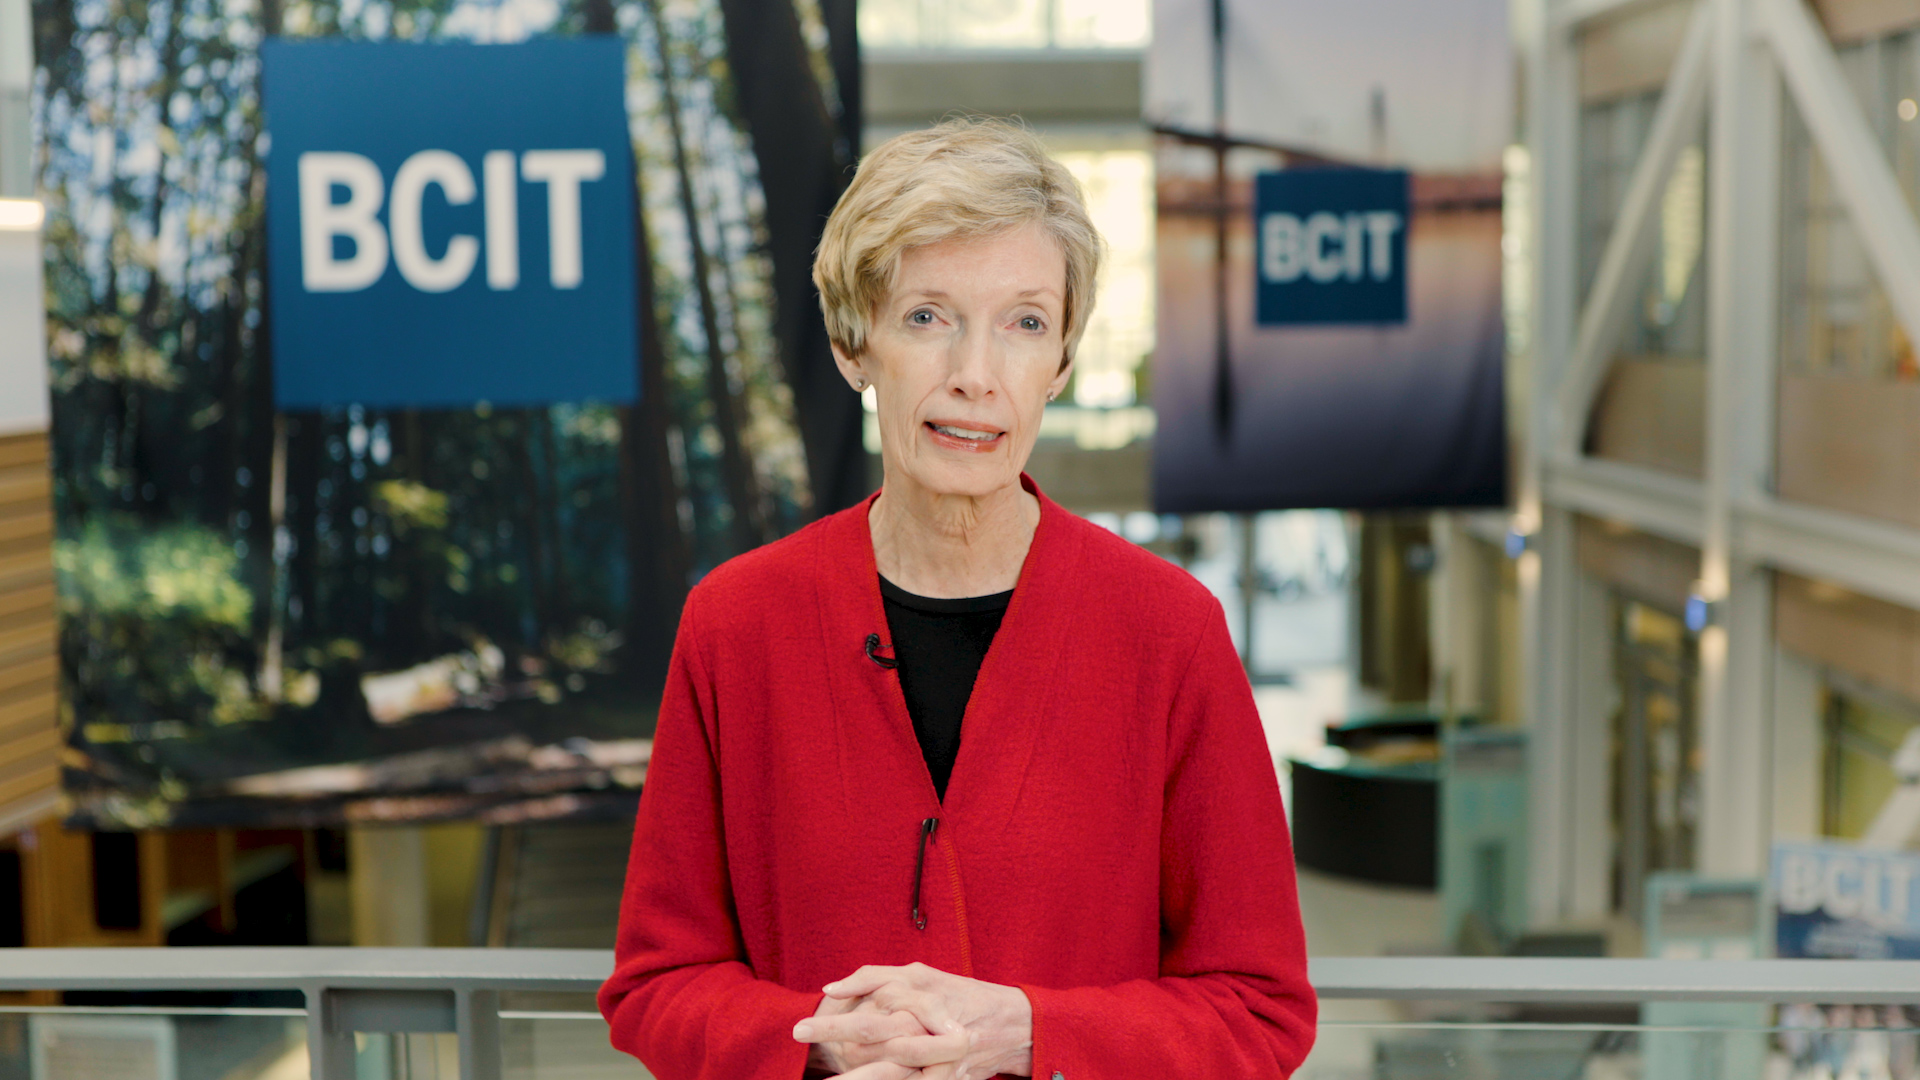 BCIT President Kathy Kinloch